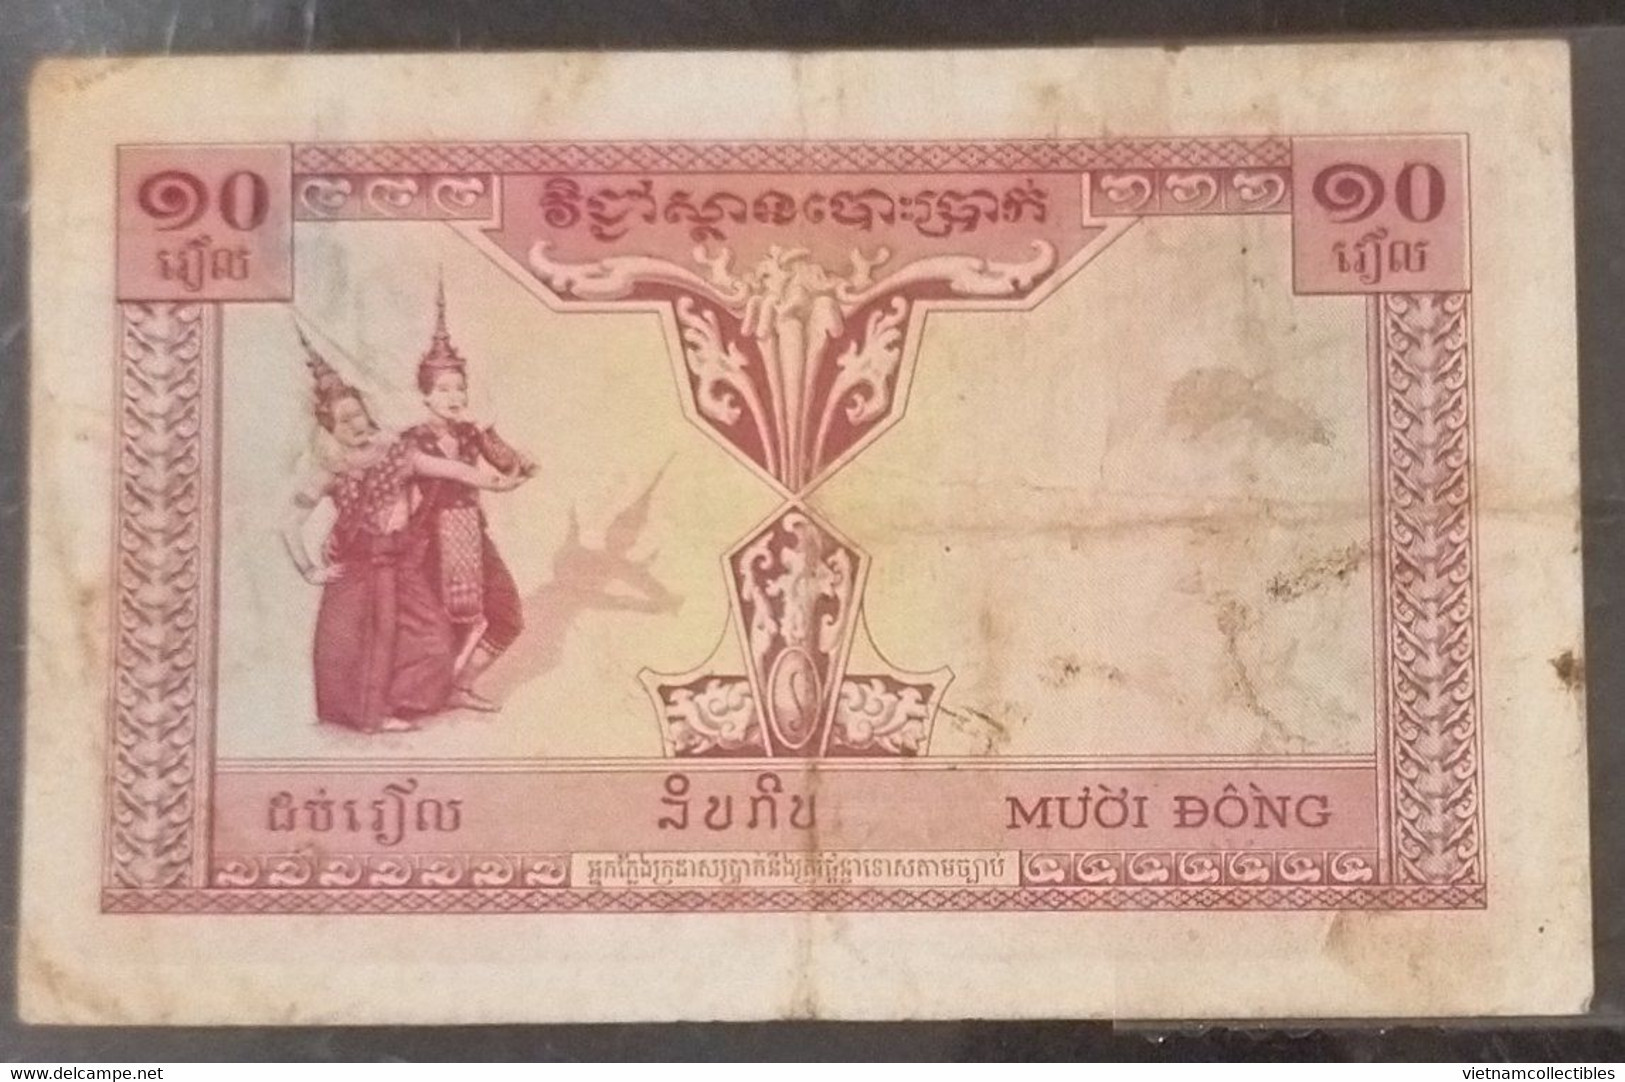 French Indochine Indochina Vietnam Viet Nam Laos Cambodia 1 Piastre VF Banknote Note 1953 - Pick # 96a / 2 Photos - Indochine